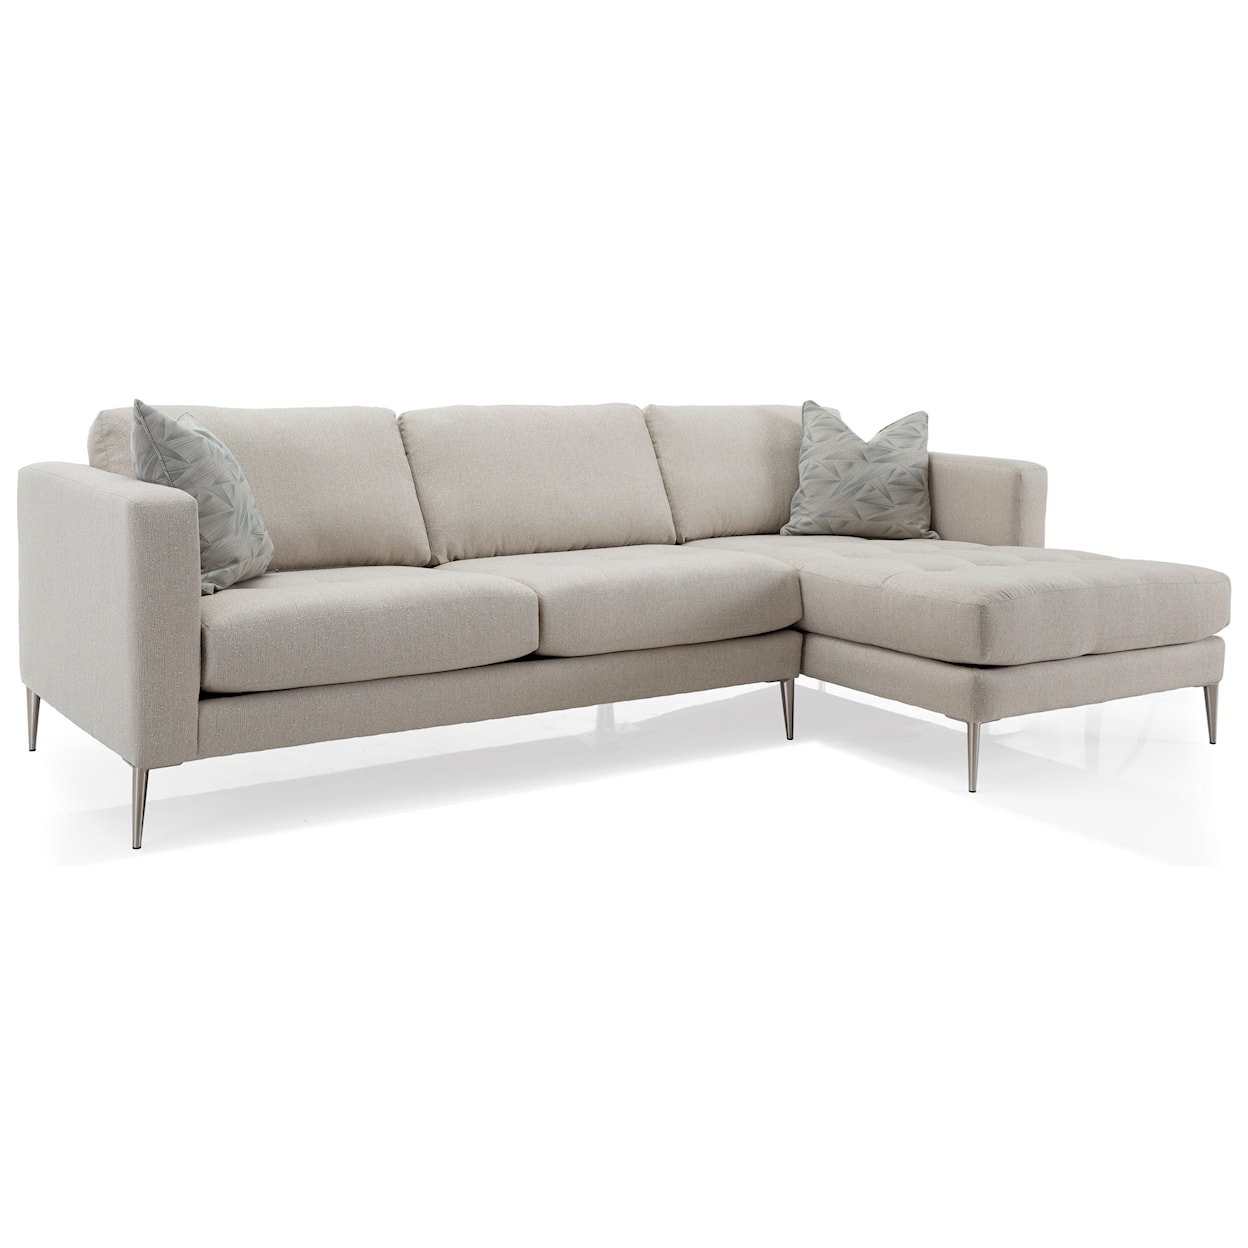 Taelor Designs 3795 Chaise Sofa